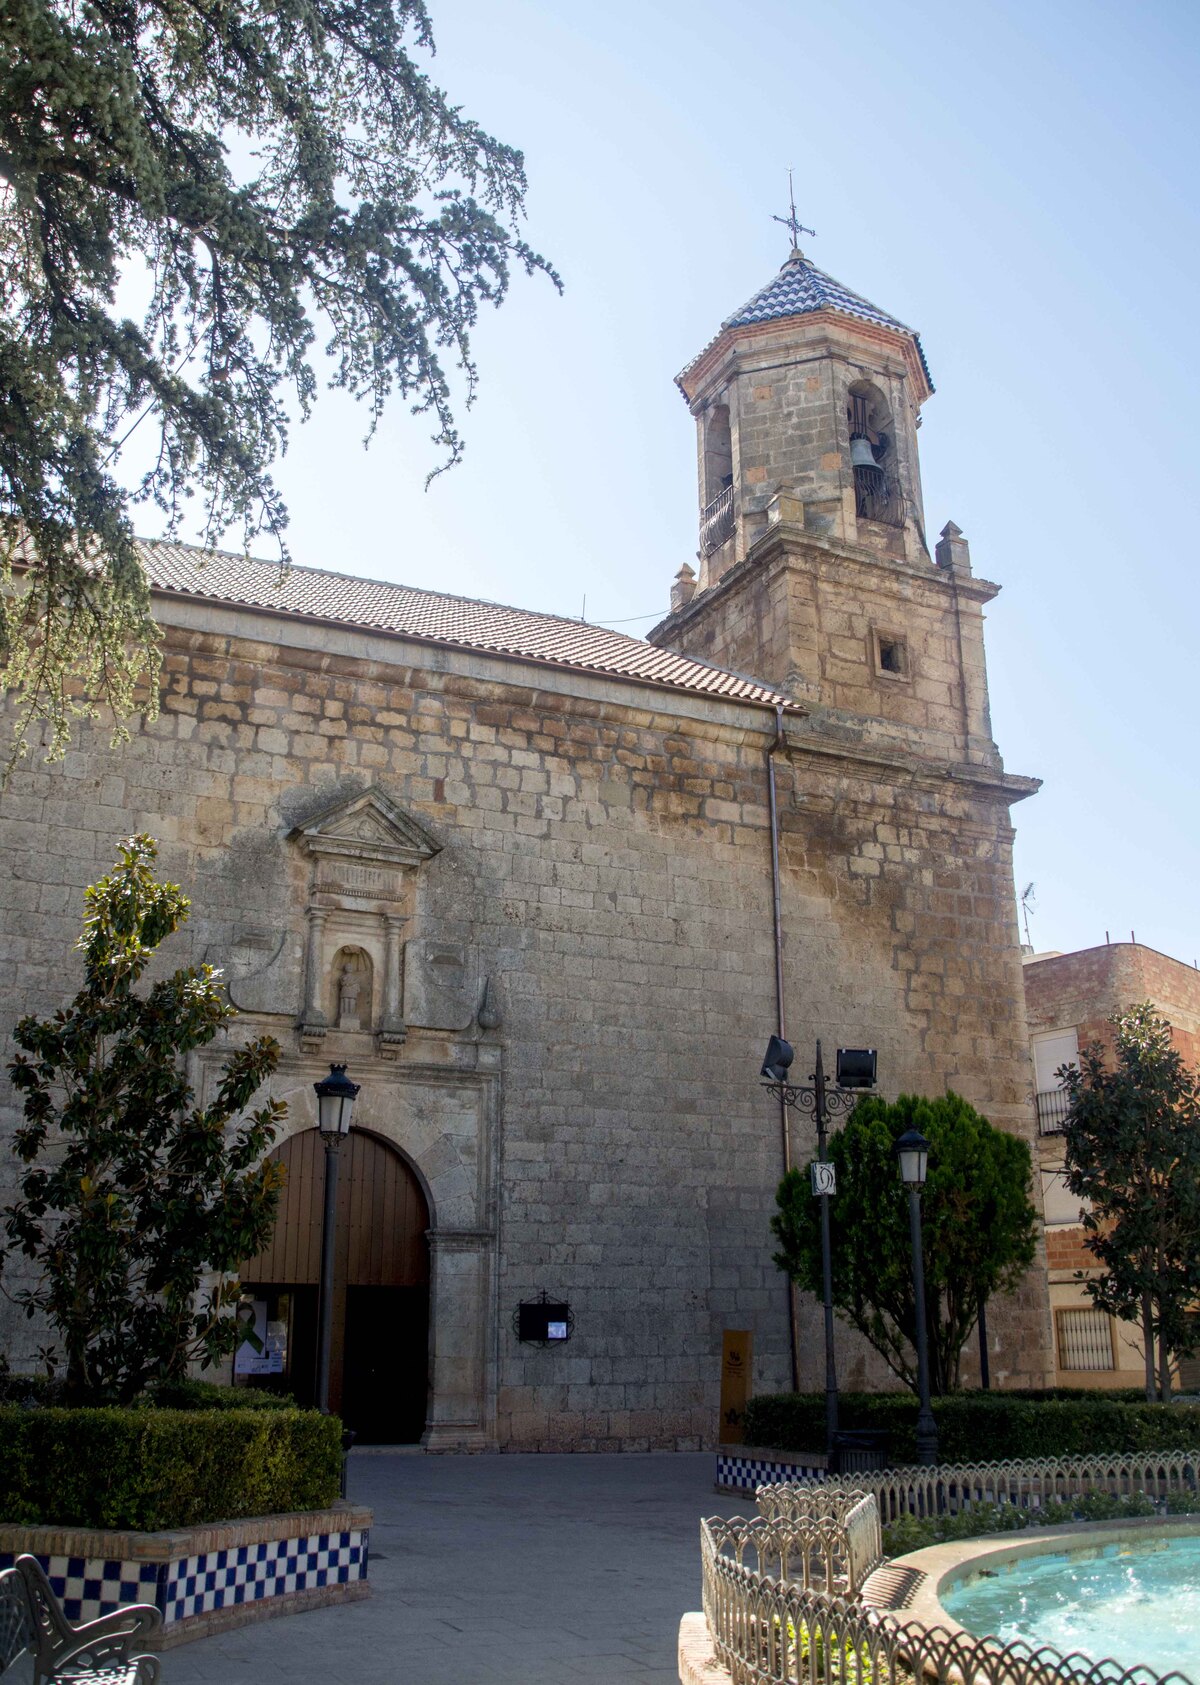 Explora la historia y belleza de la Iglesia Parroquial de San Juan Bautista en Navas de San Juan